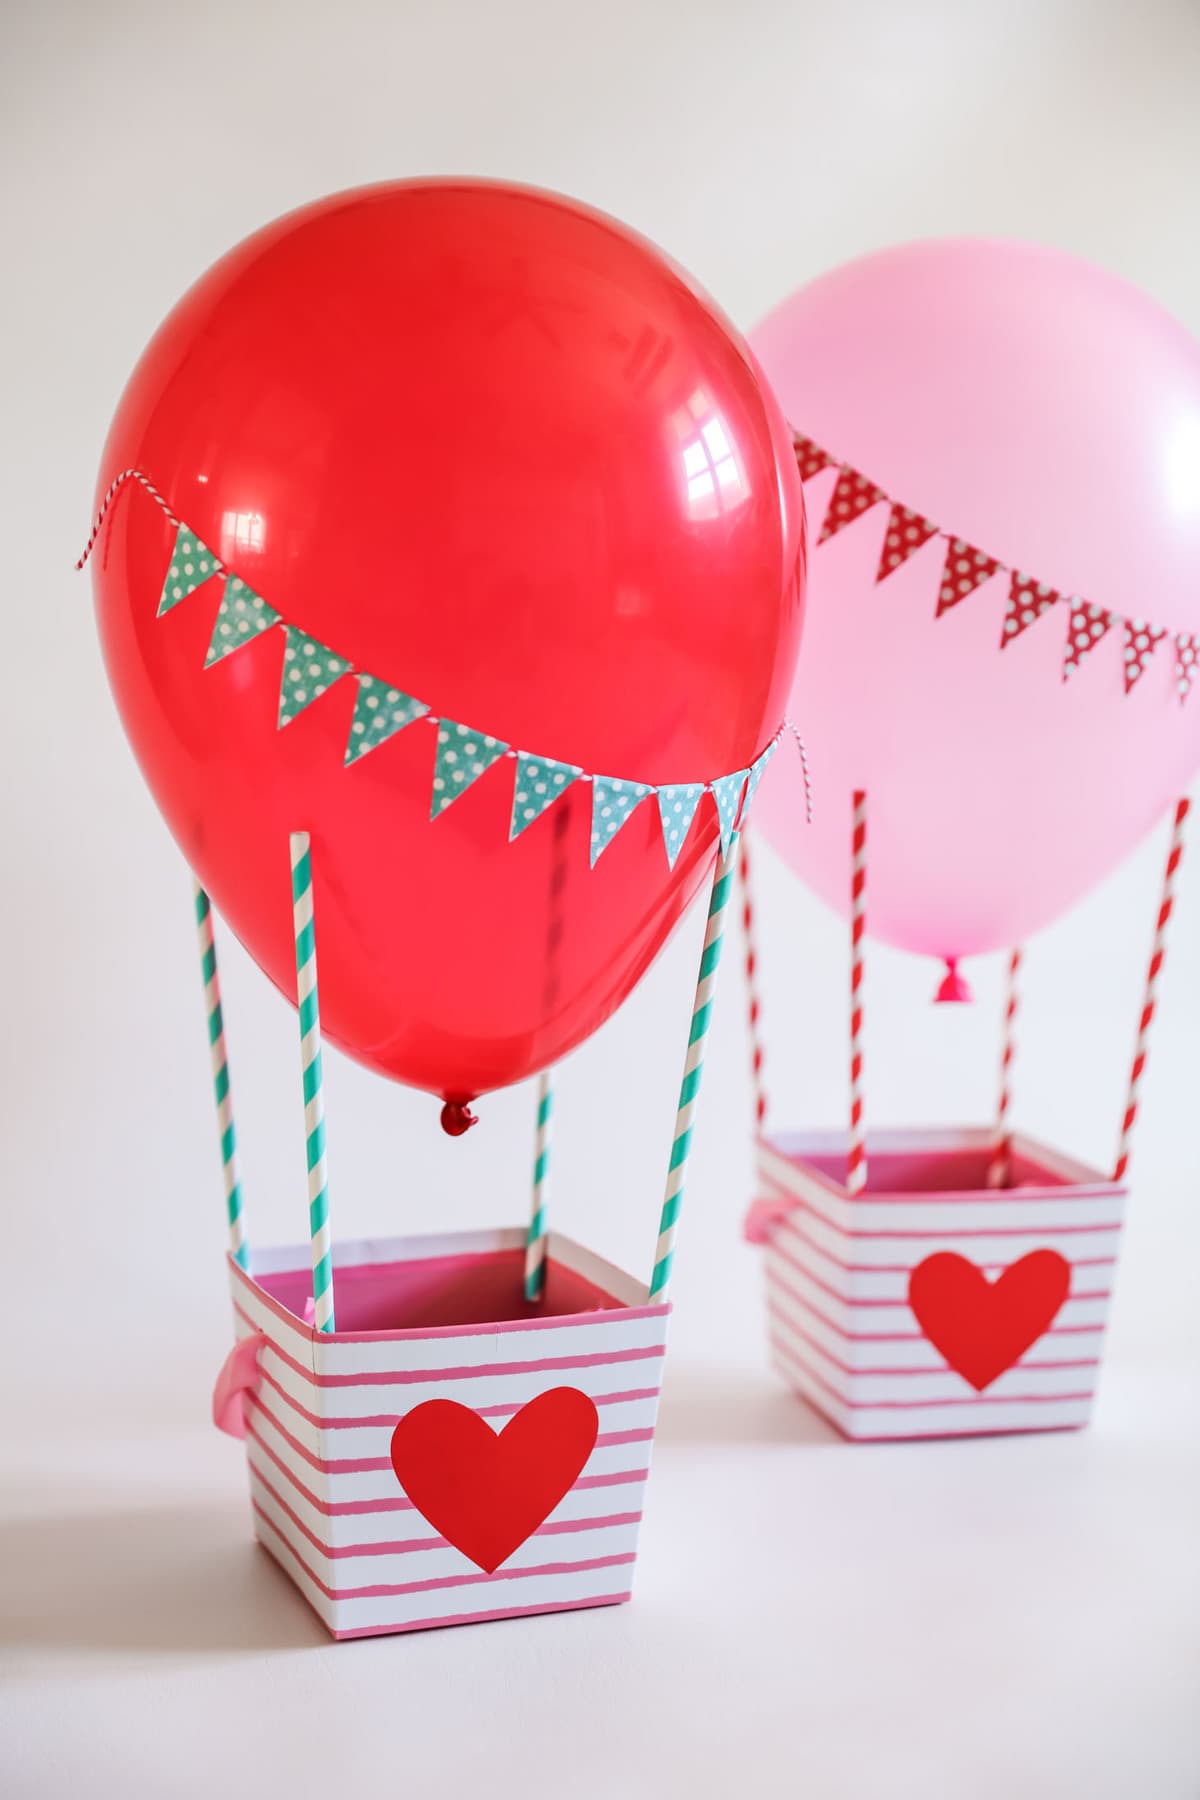 Valentines Box Ideas – Let's DIY It All – With Kritsyn Merkley